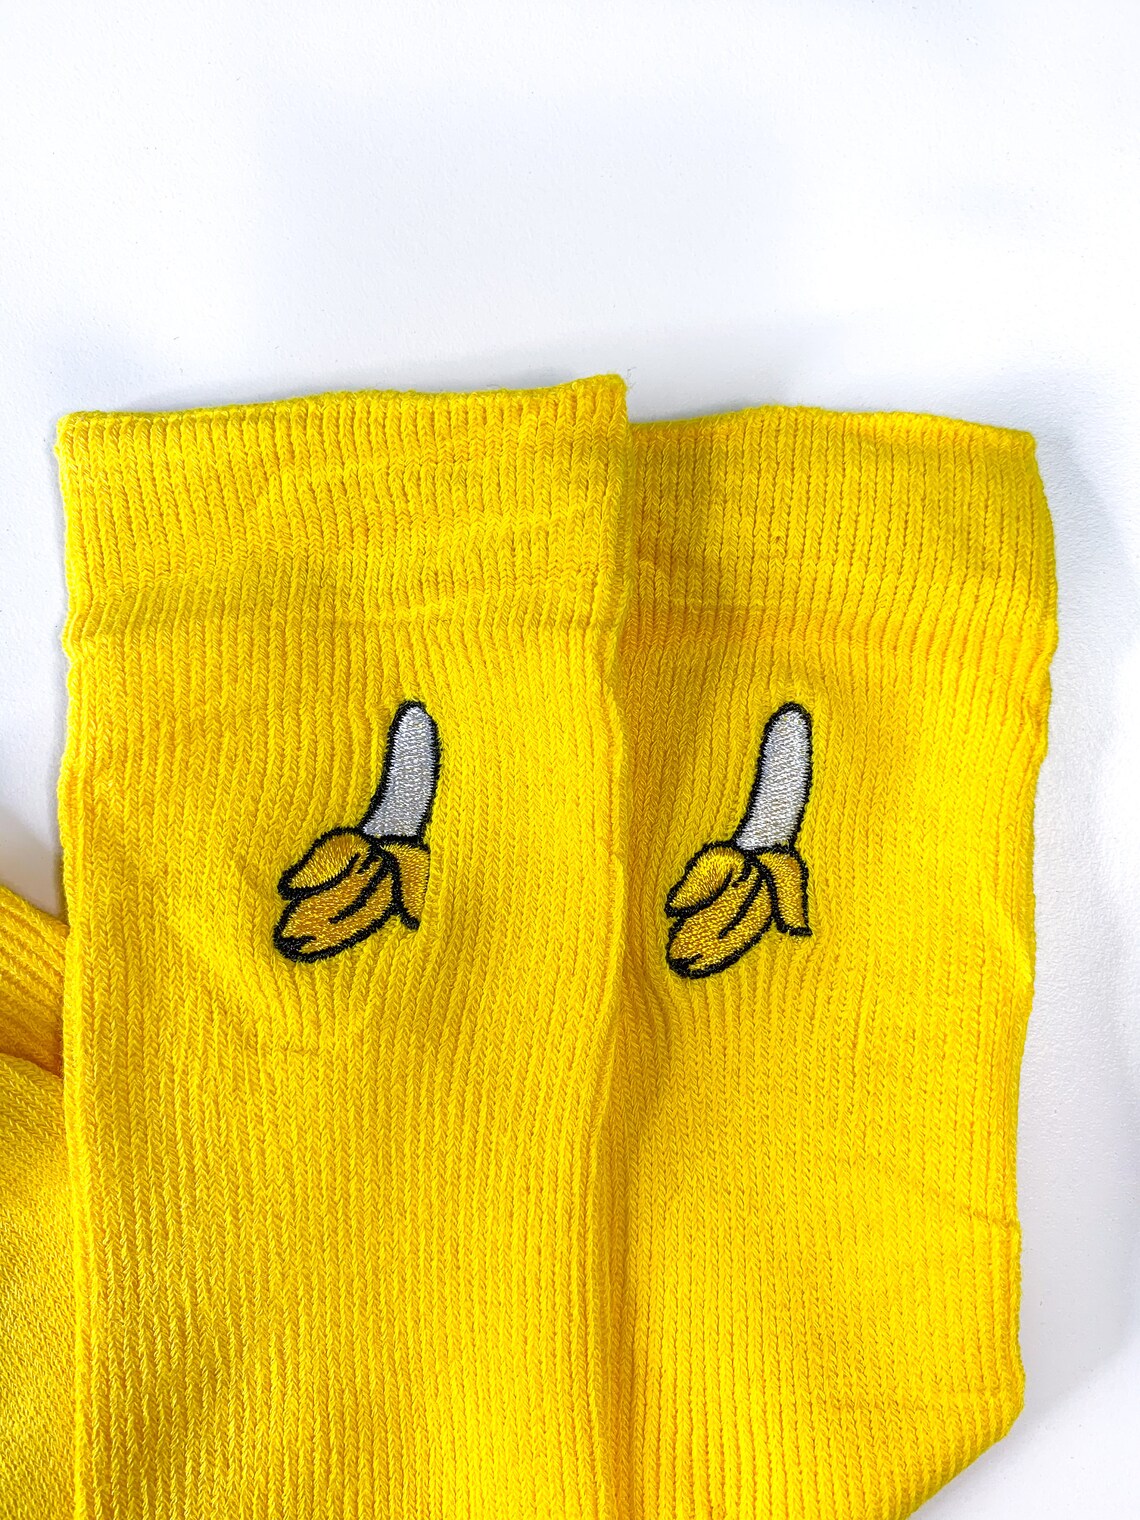 Banana fruiti crew socks funky yellow socks | Etsy